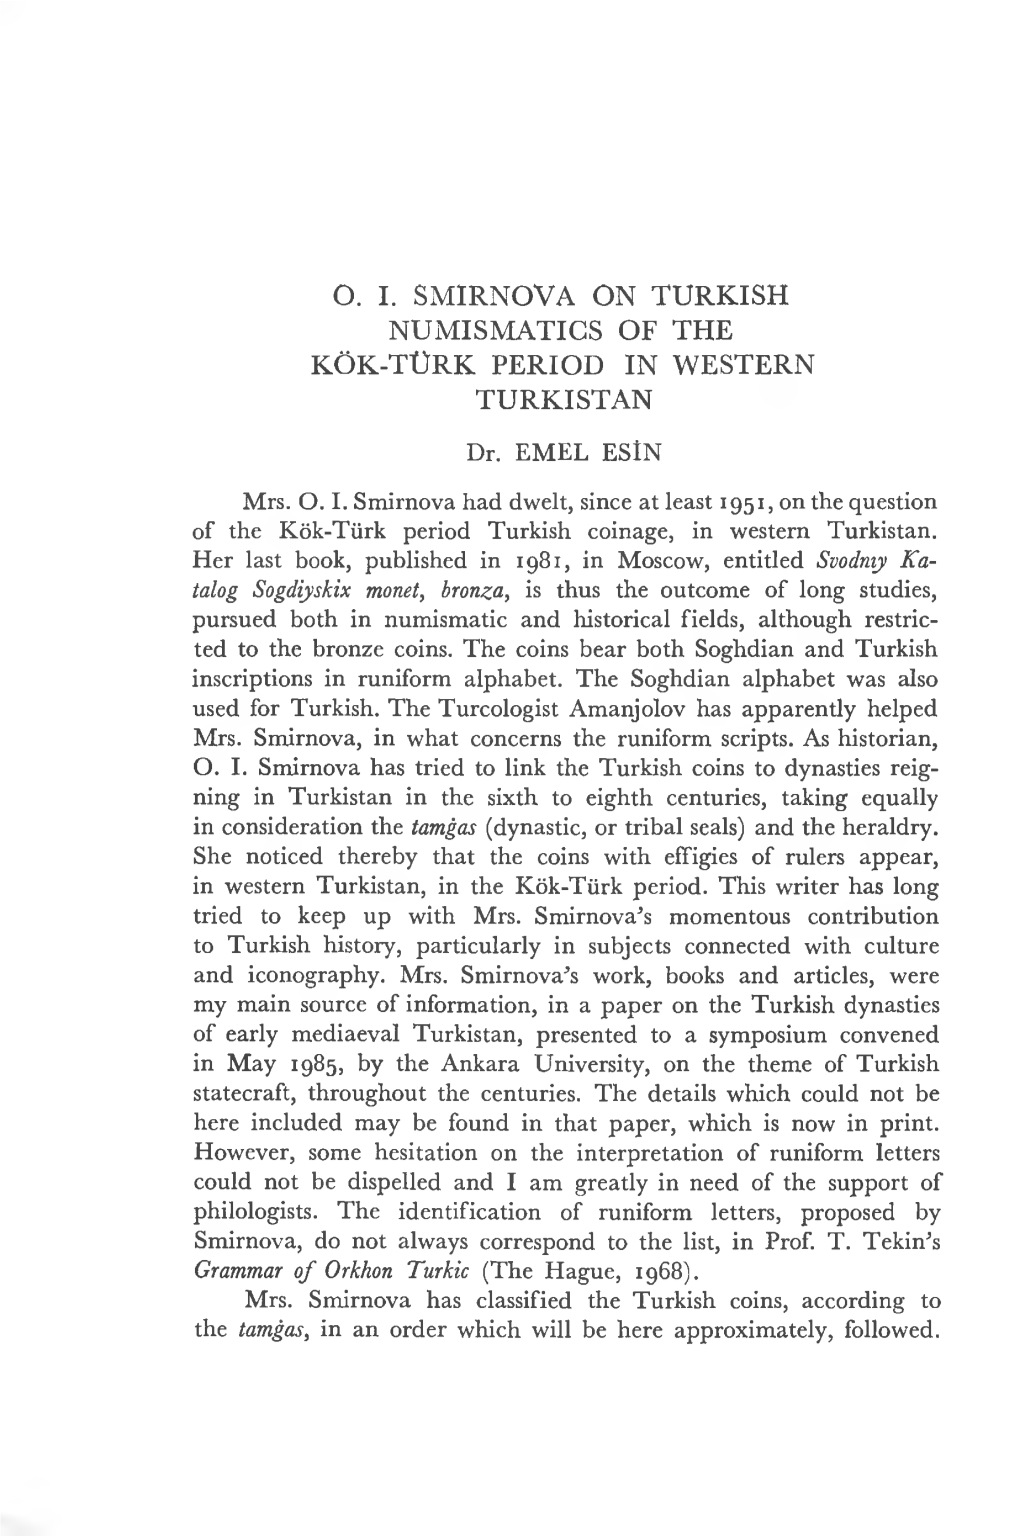 Numismatics of the Kök-Türk Period in Western Türkistan